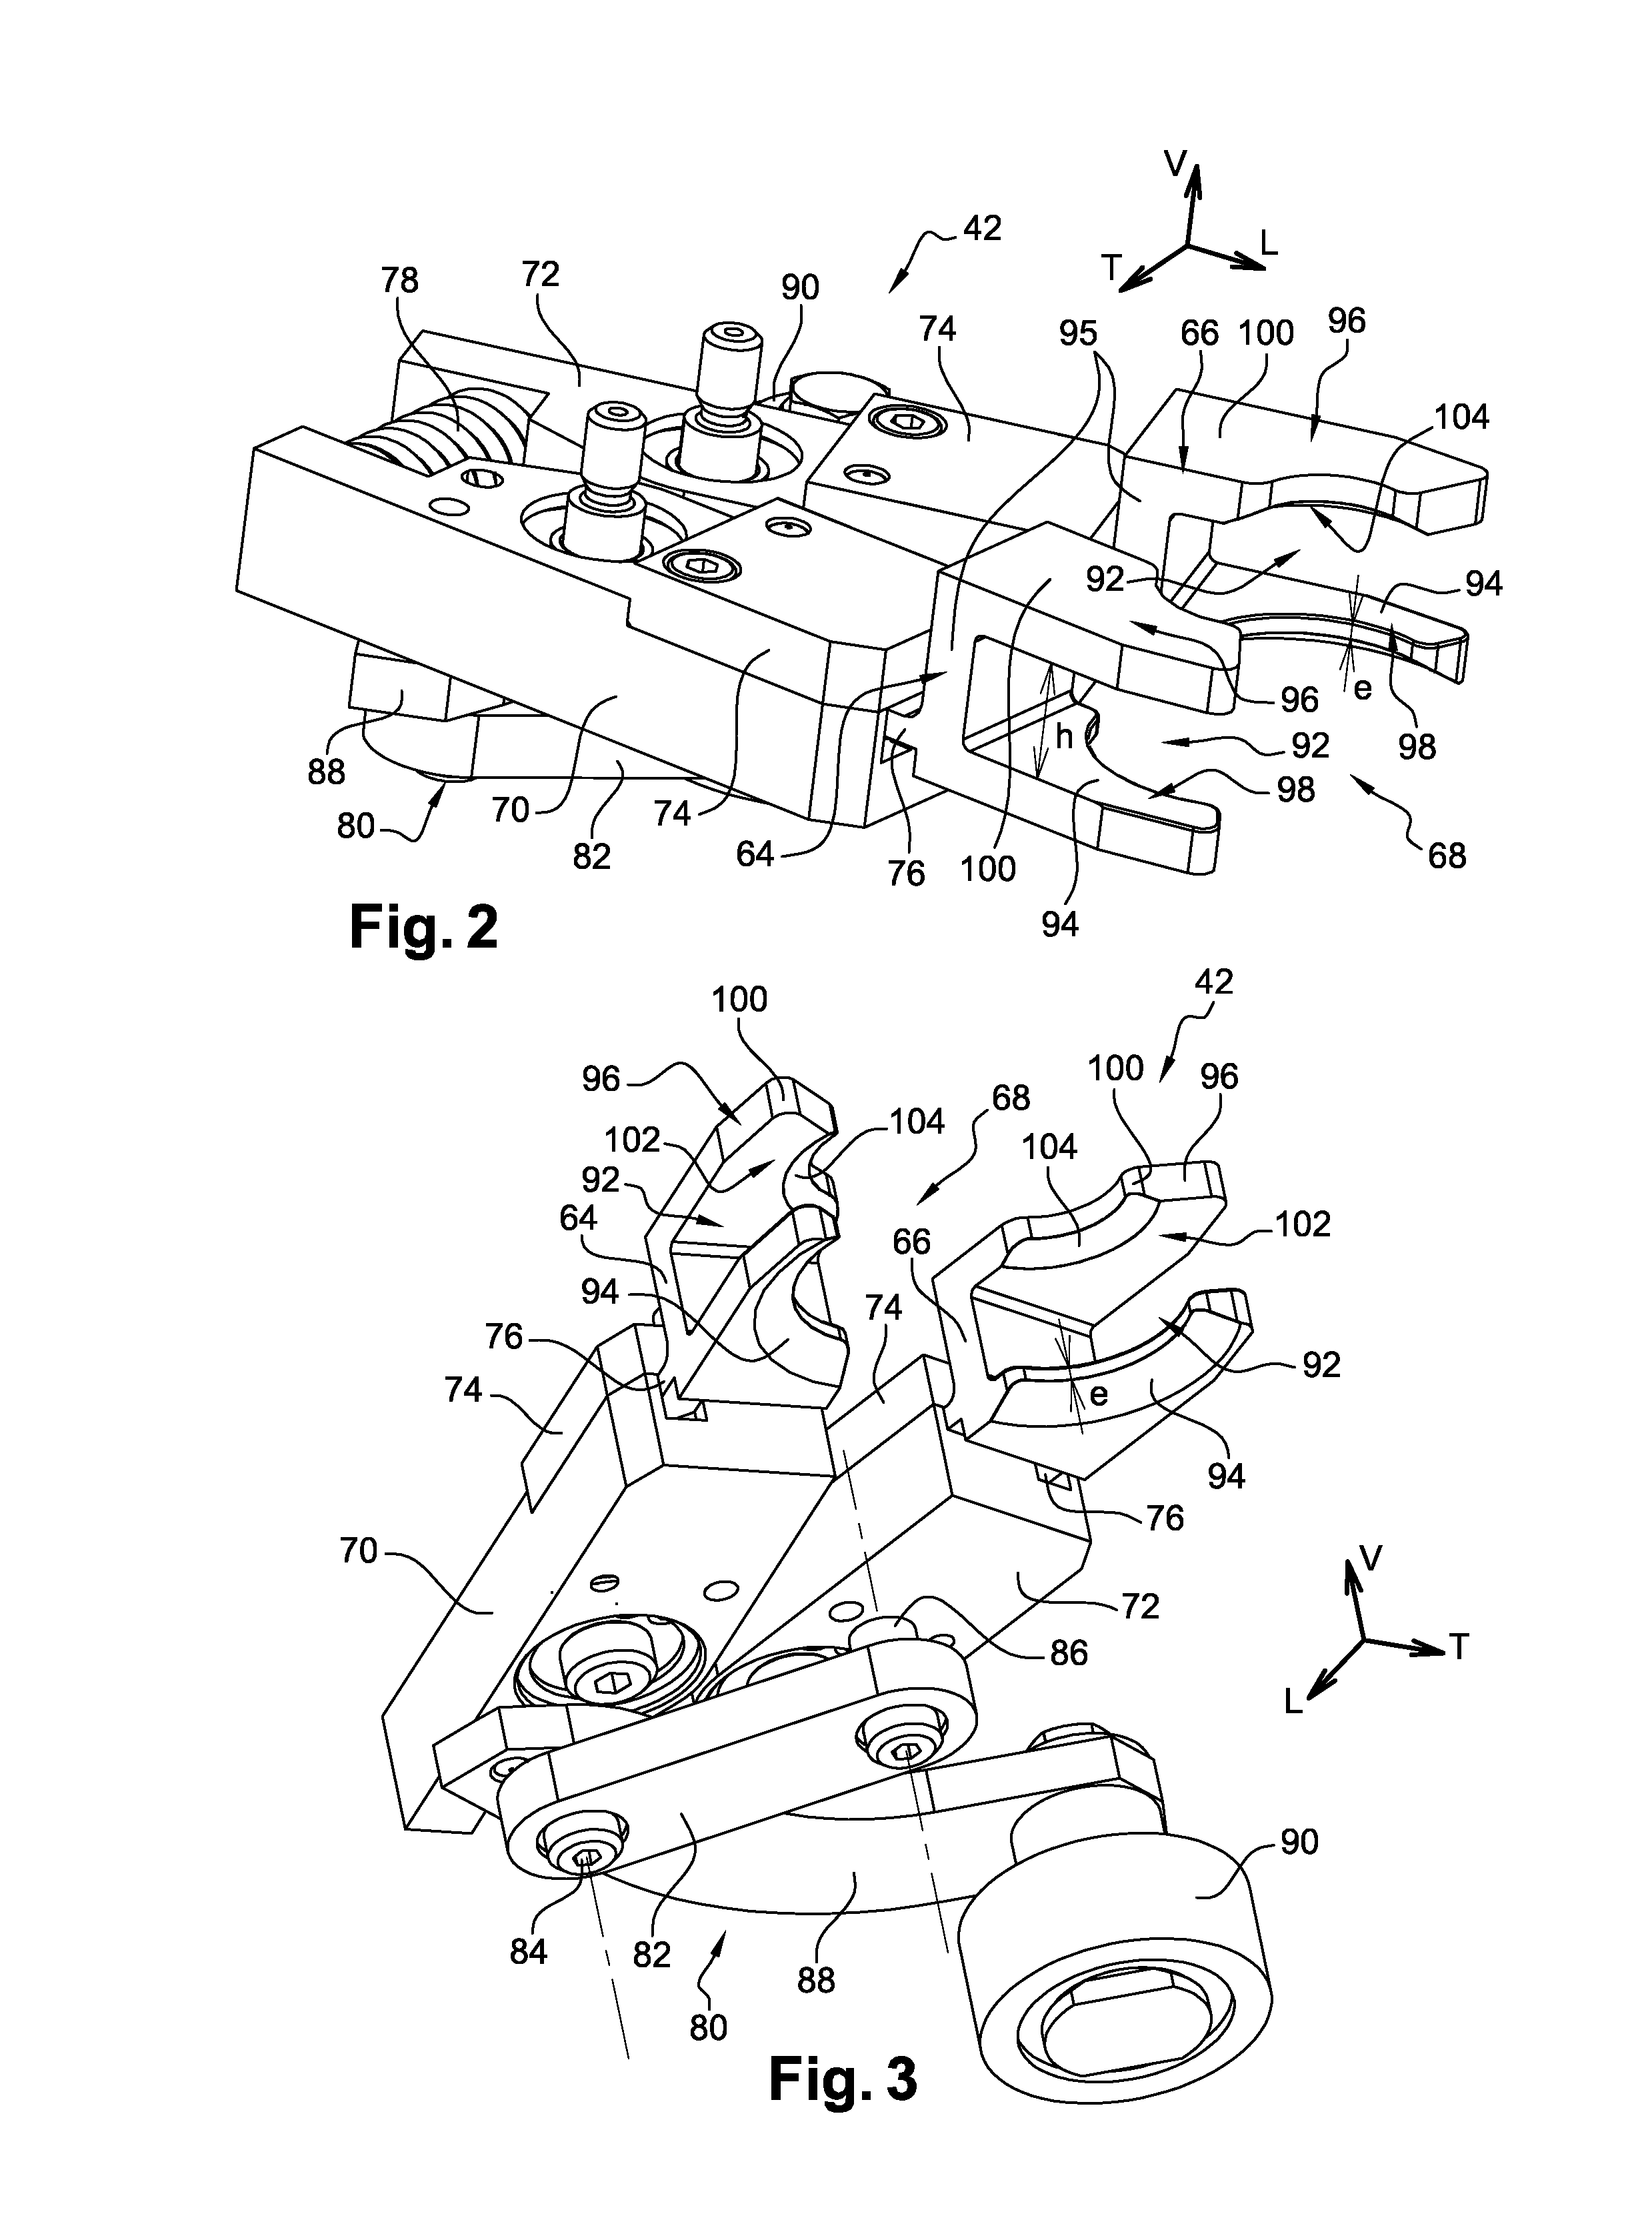 Transfer device comprising a gripper